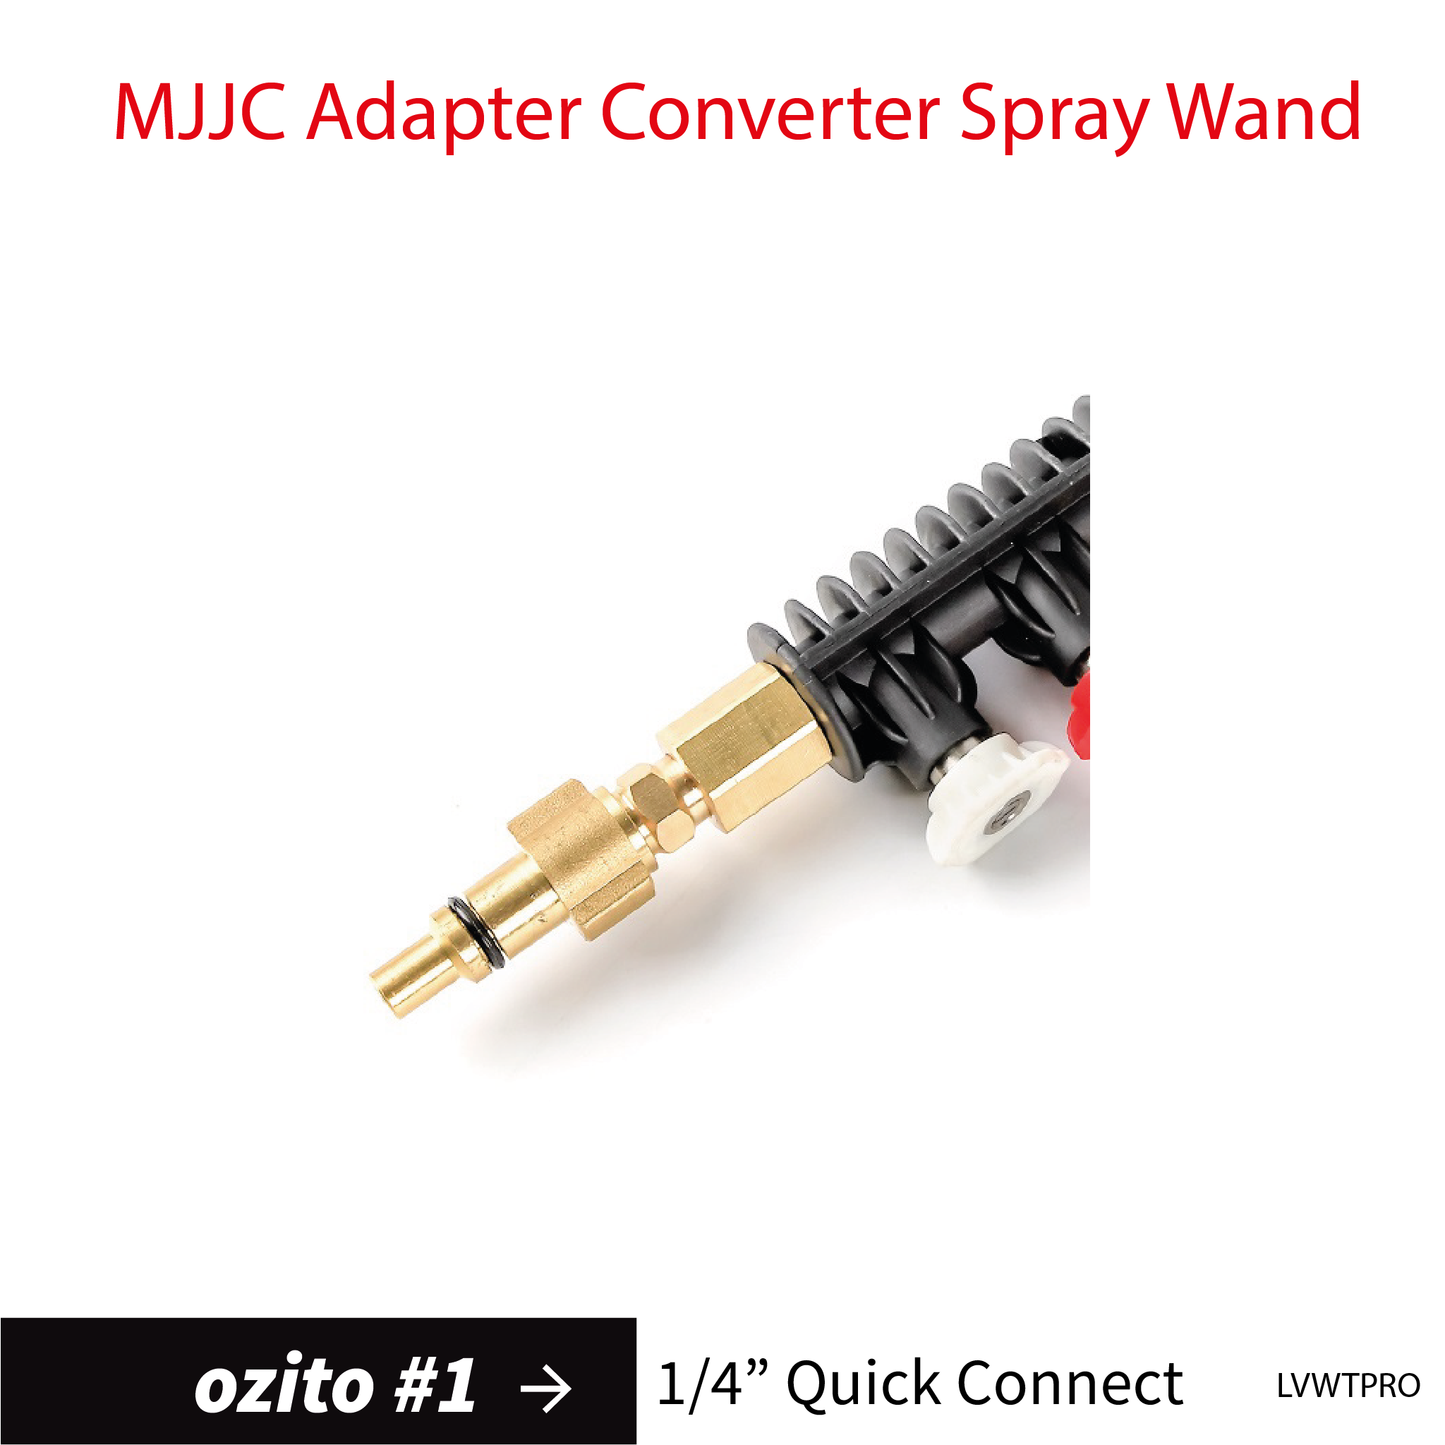 Ozito#1 MJJC Adapter Conversion Converter pressure washer Spray Wand with 5 spray tips